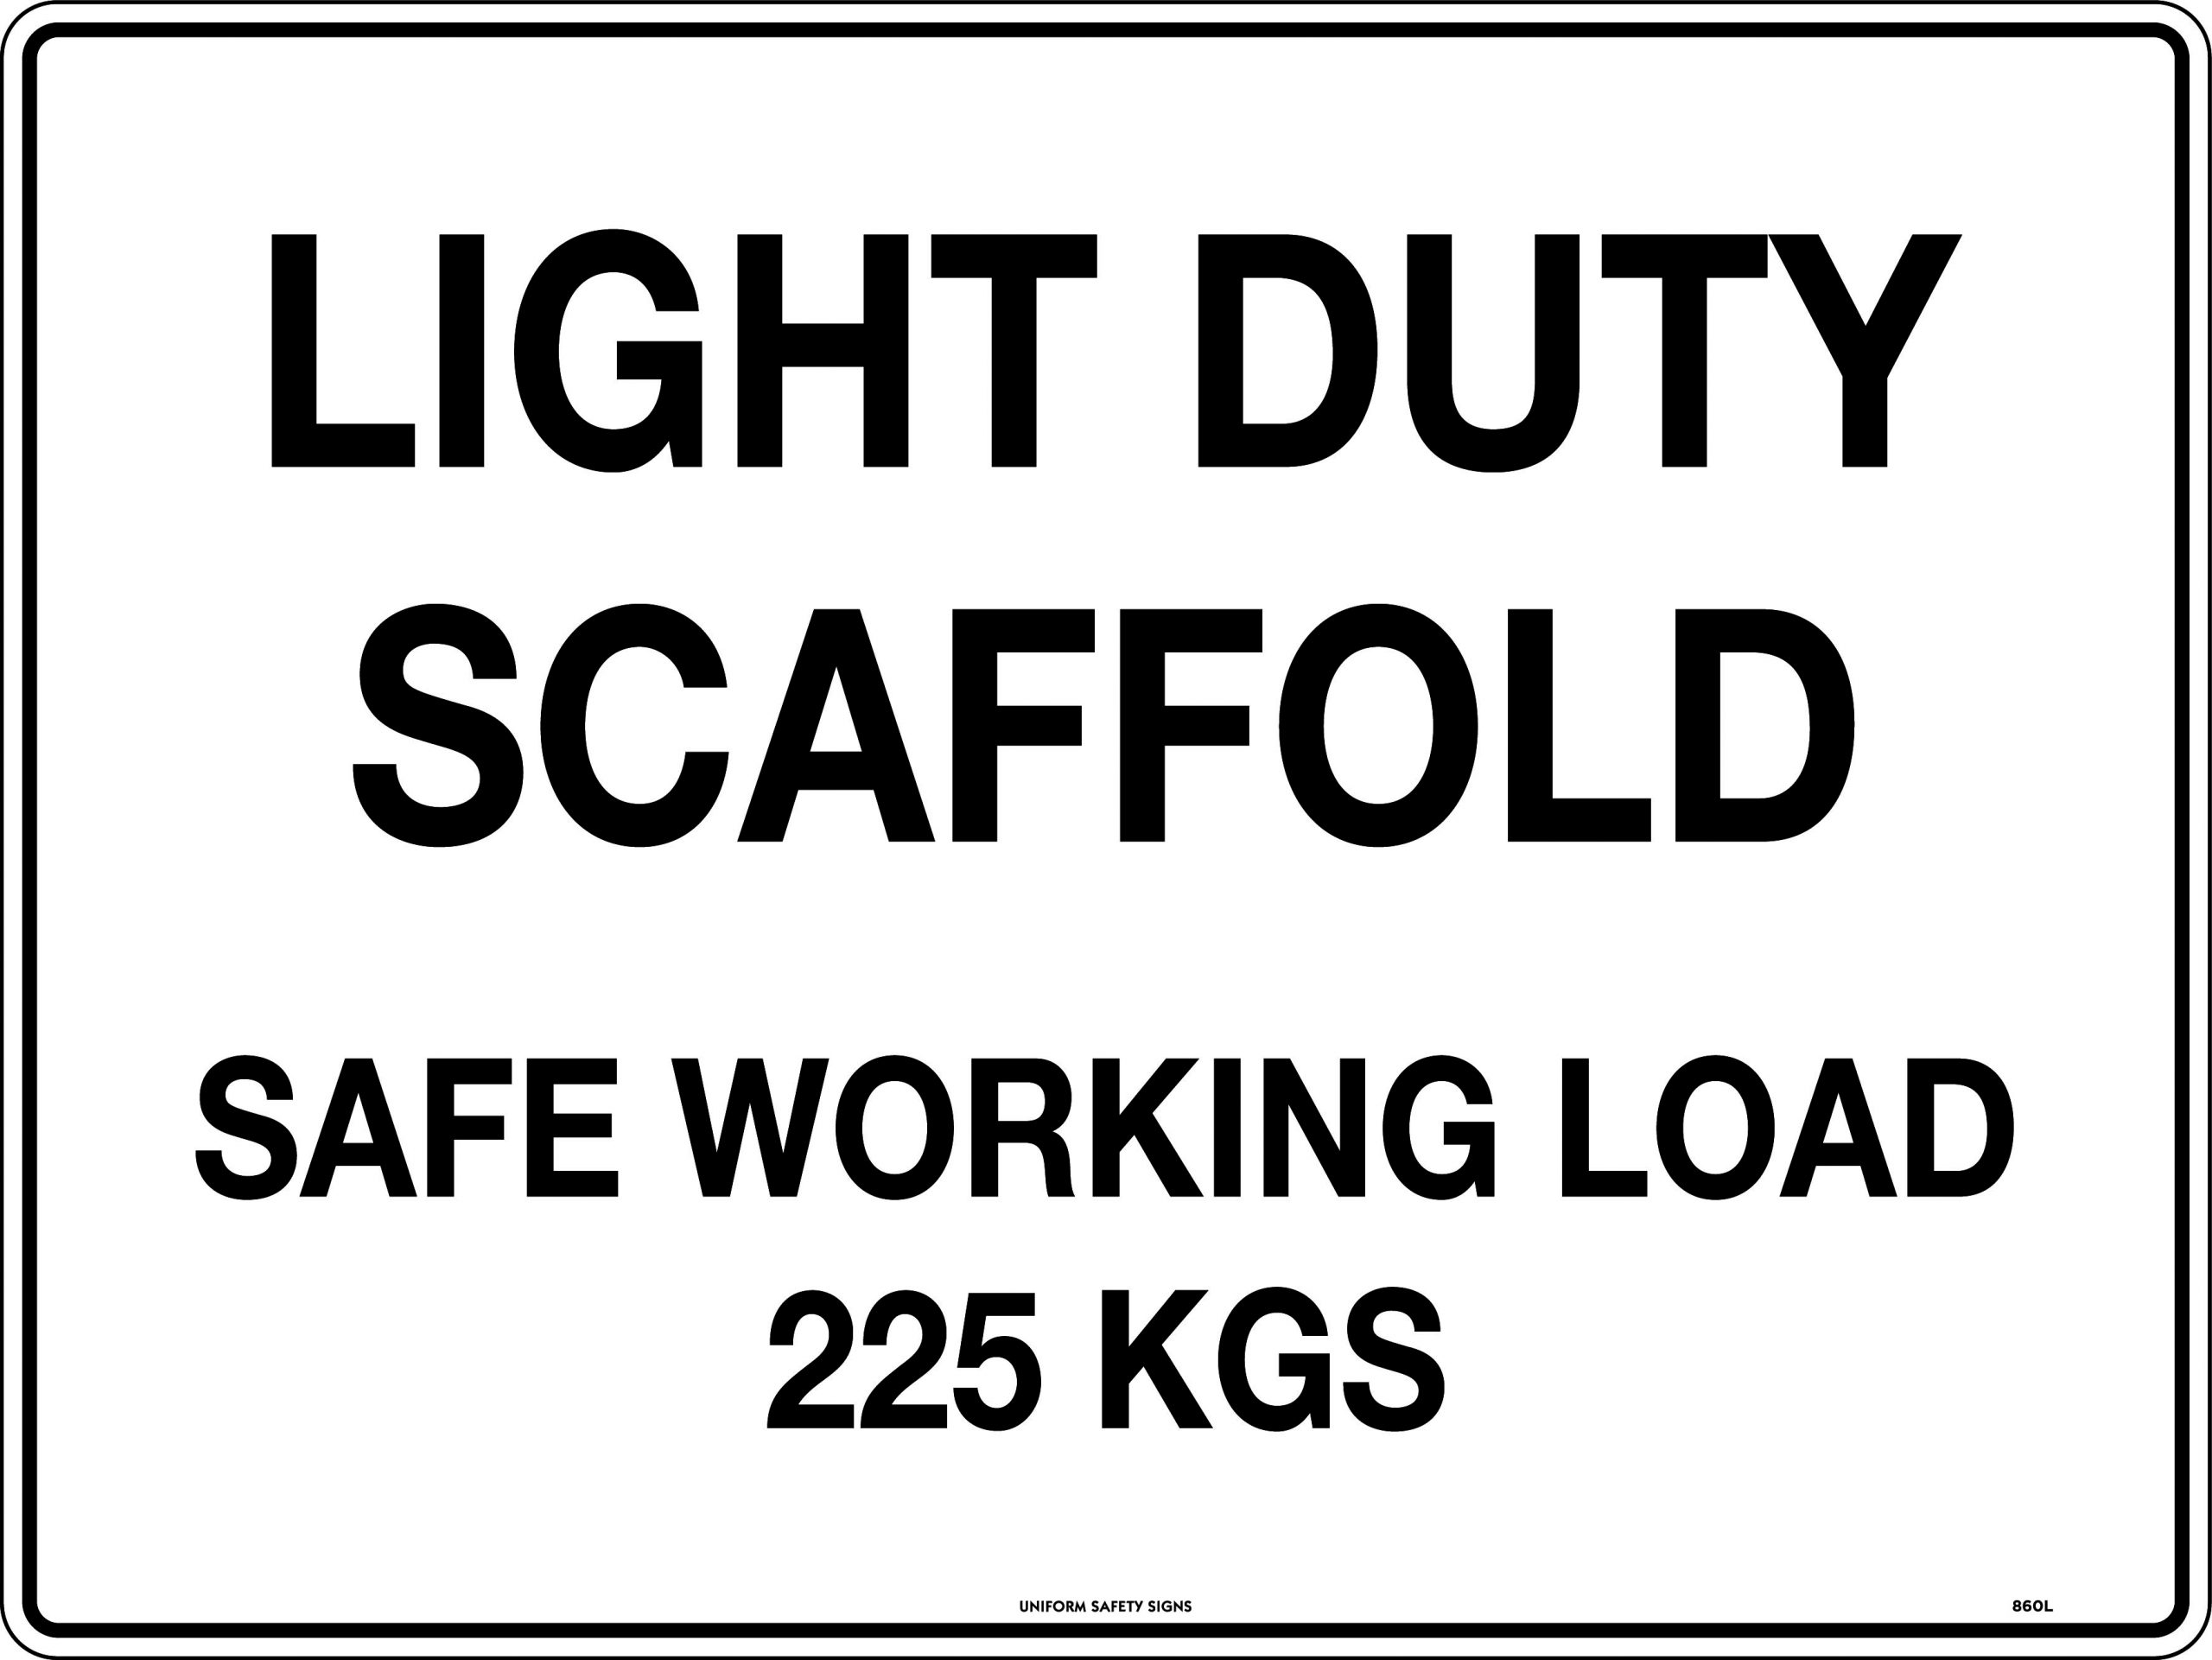 UNIFORM SAFETY 300X225MM METAL LIGHT DUTY SCAFFOLD SAFE WORKING LOAD 2